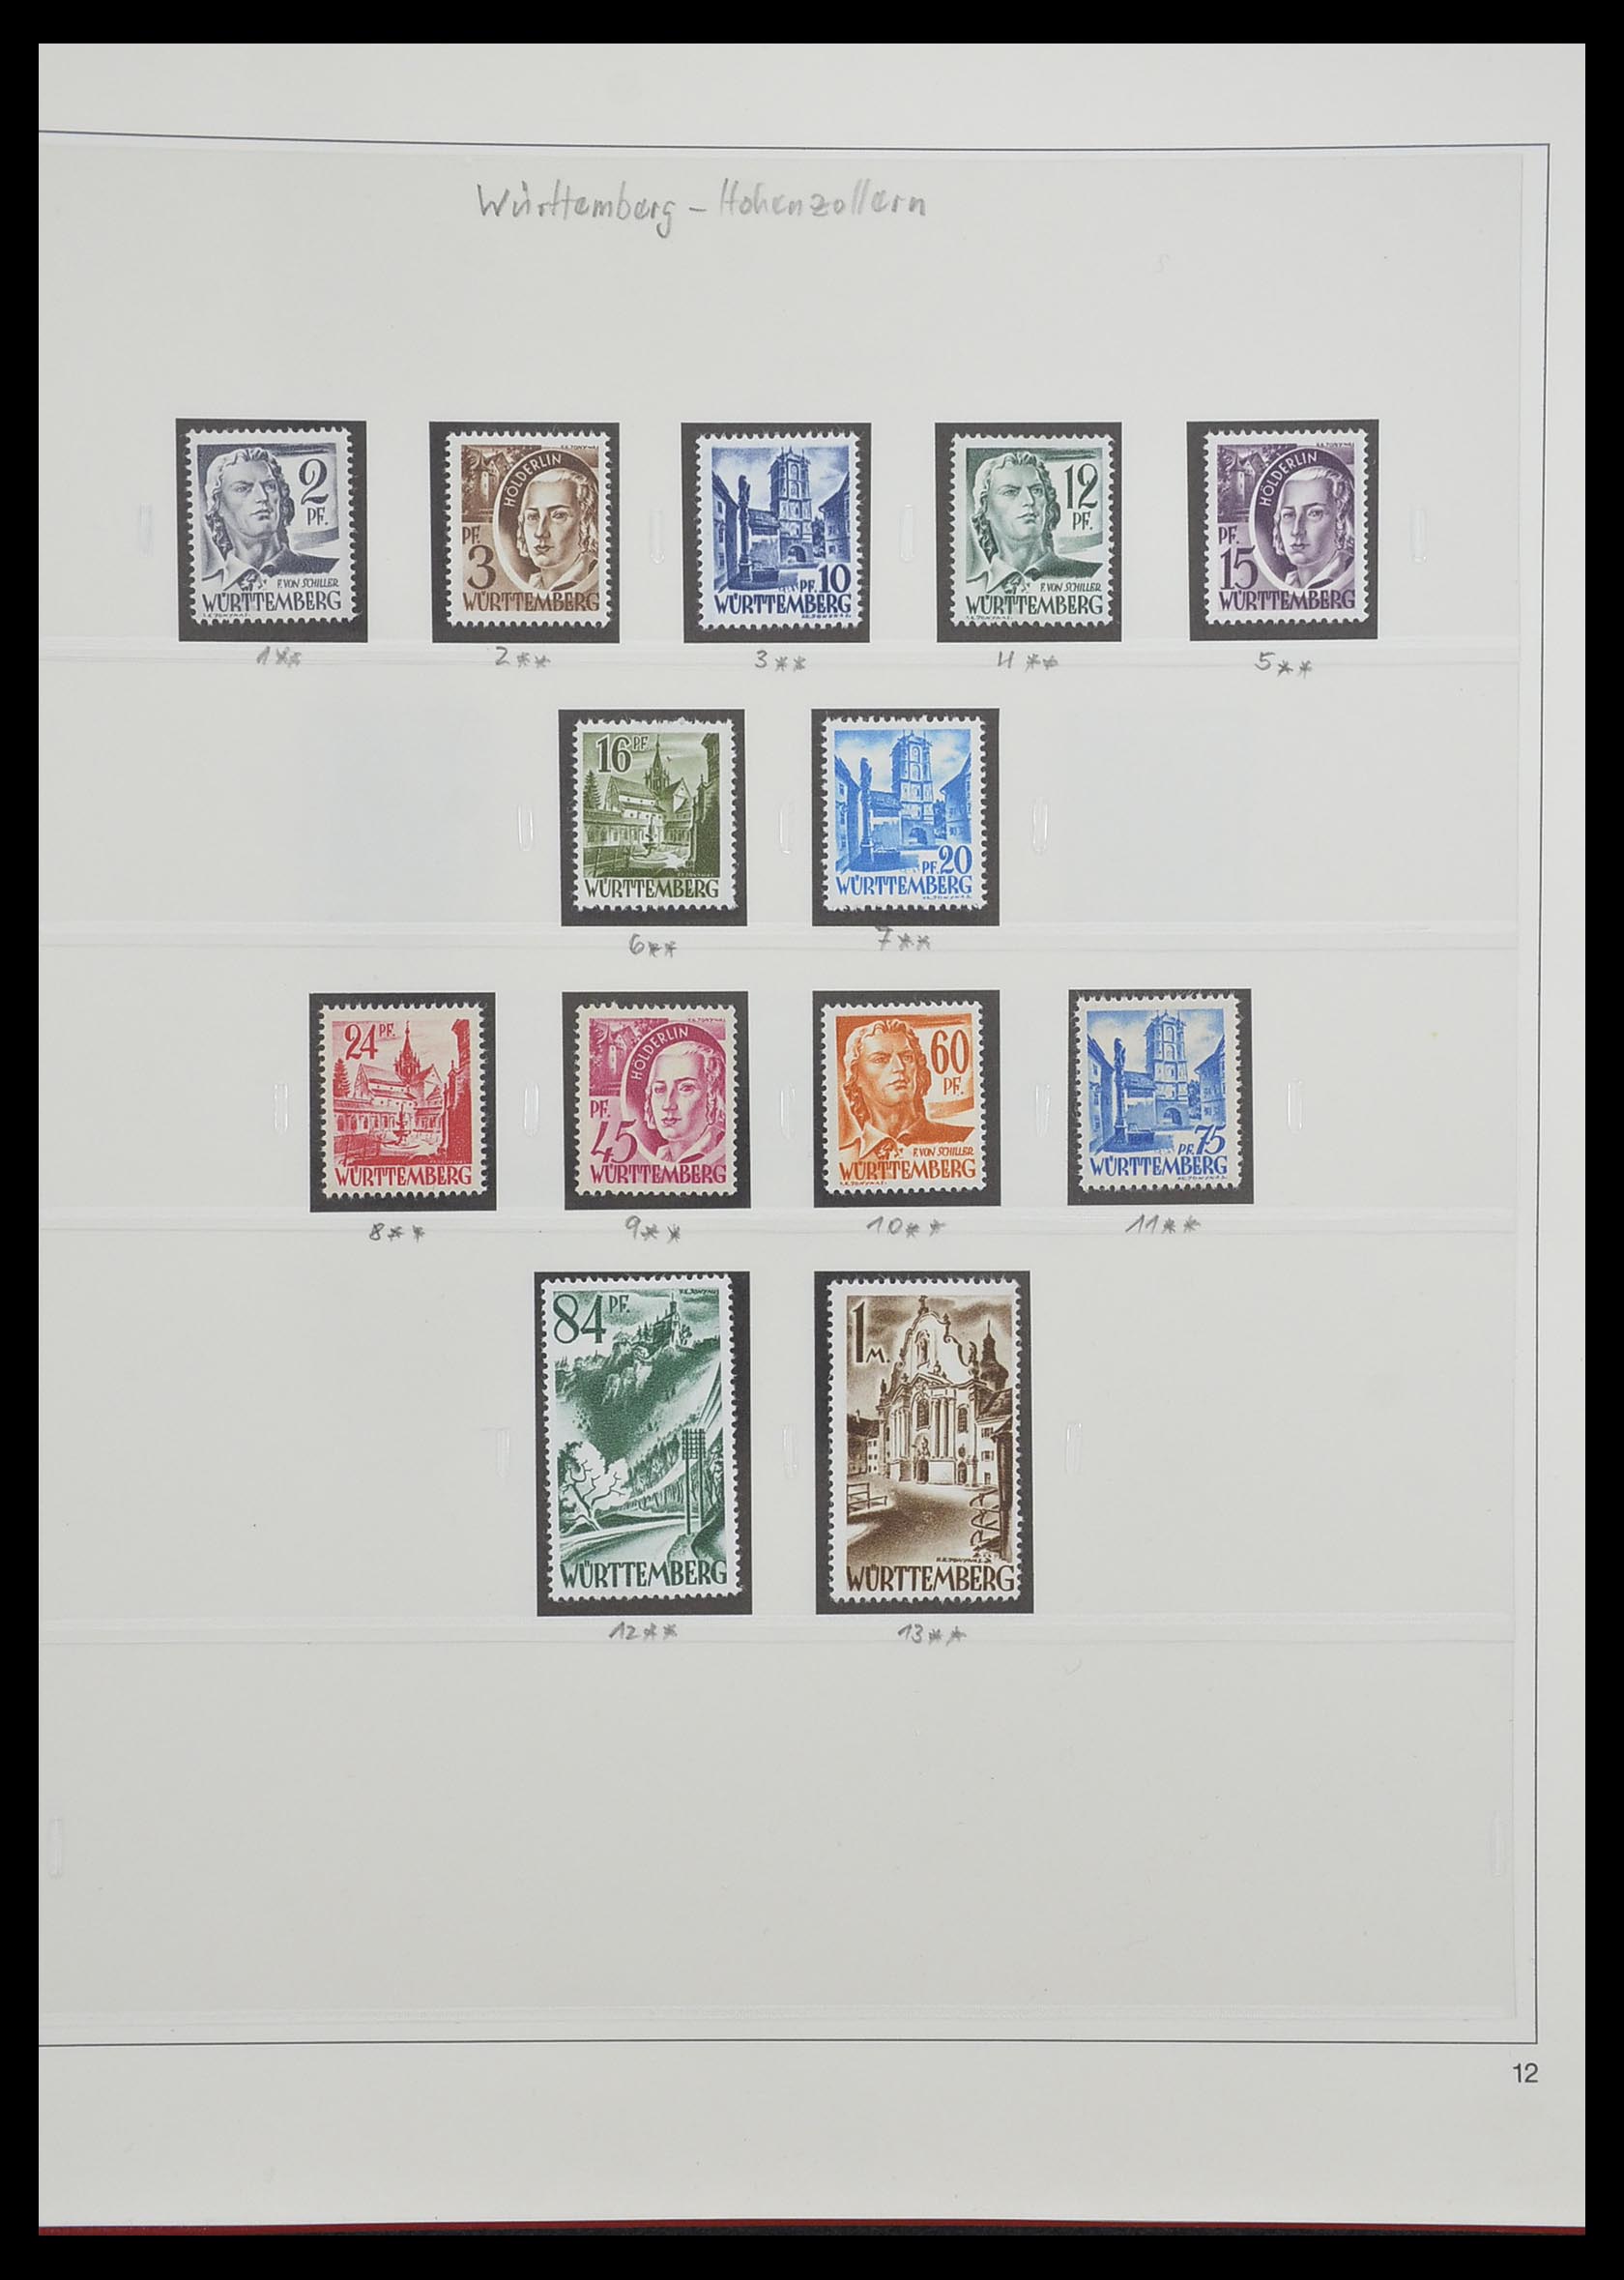 33208 028 - Stamp collection 33208 German Zones 1945-1949.